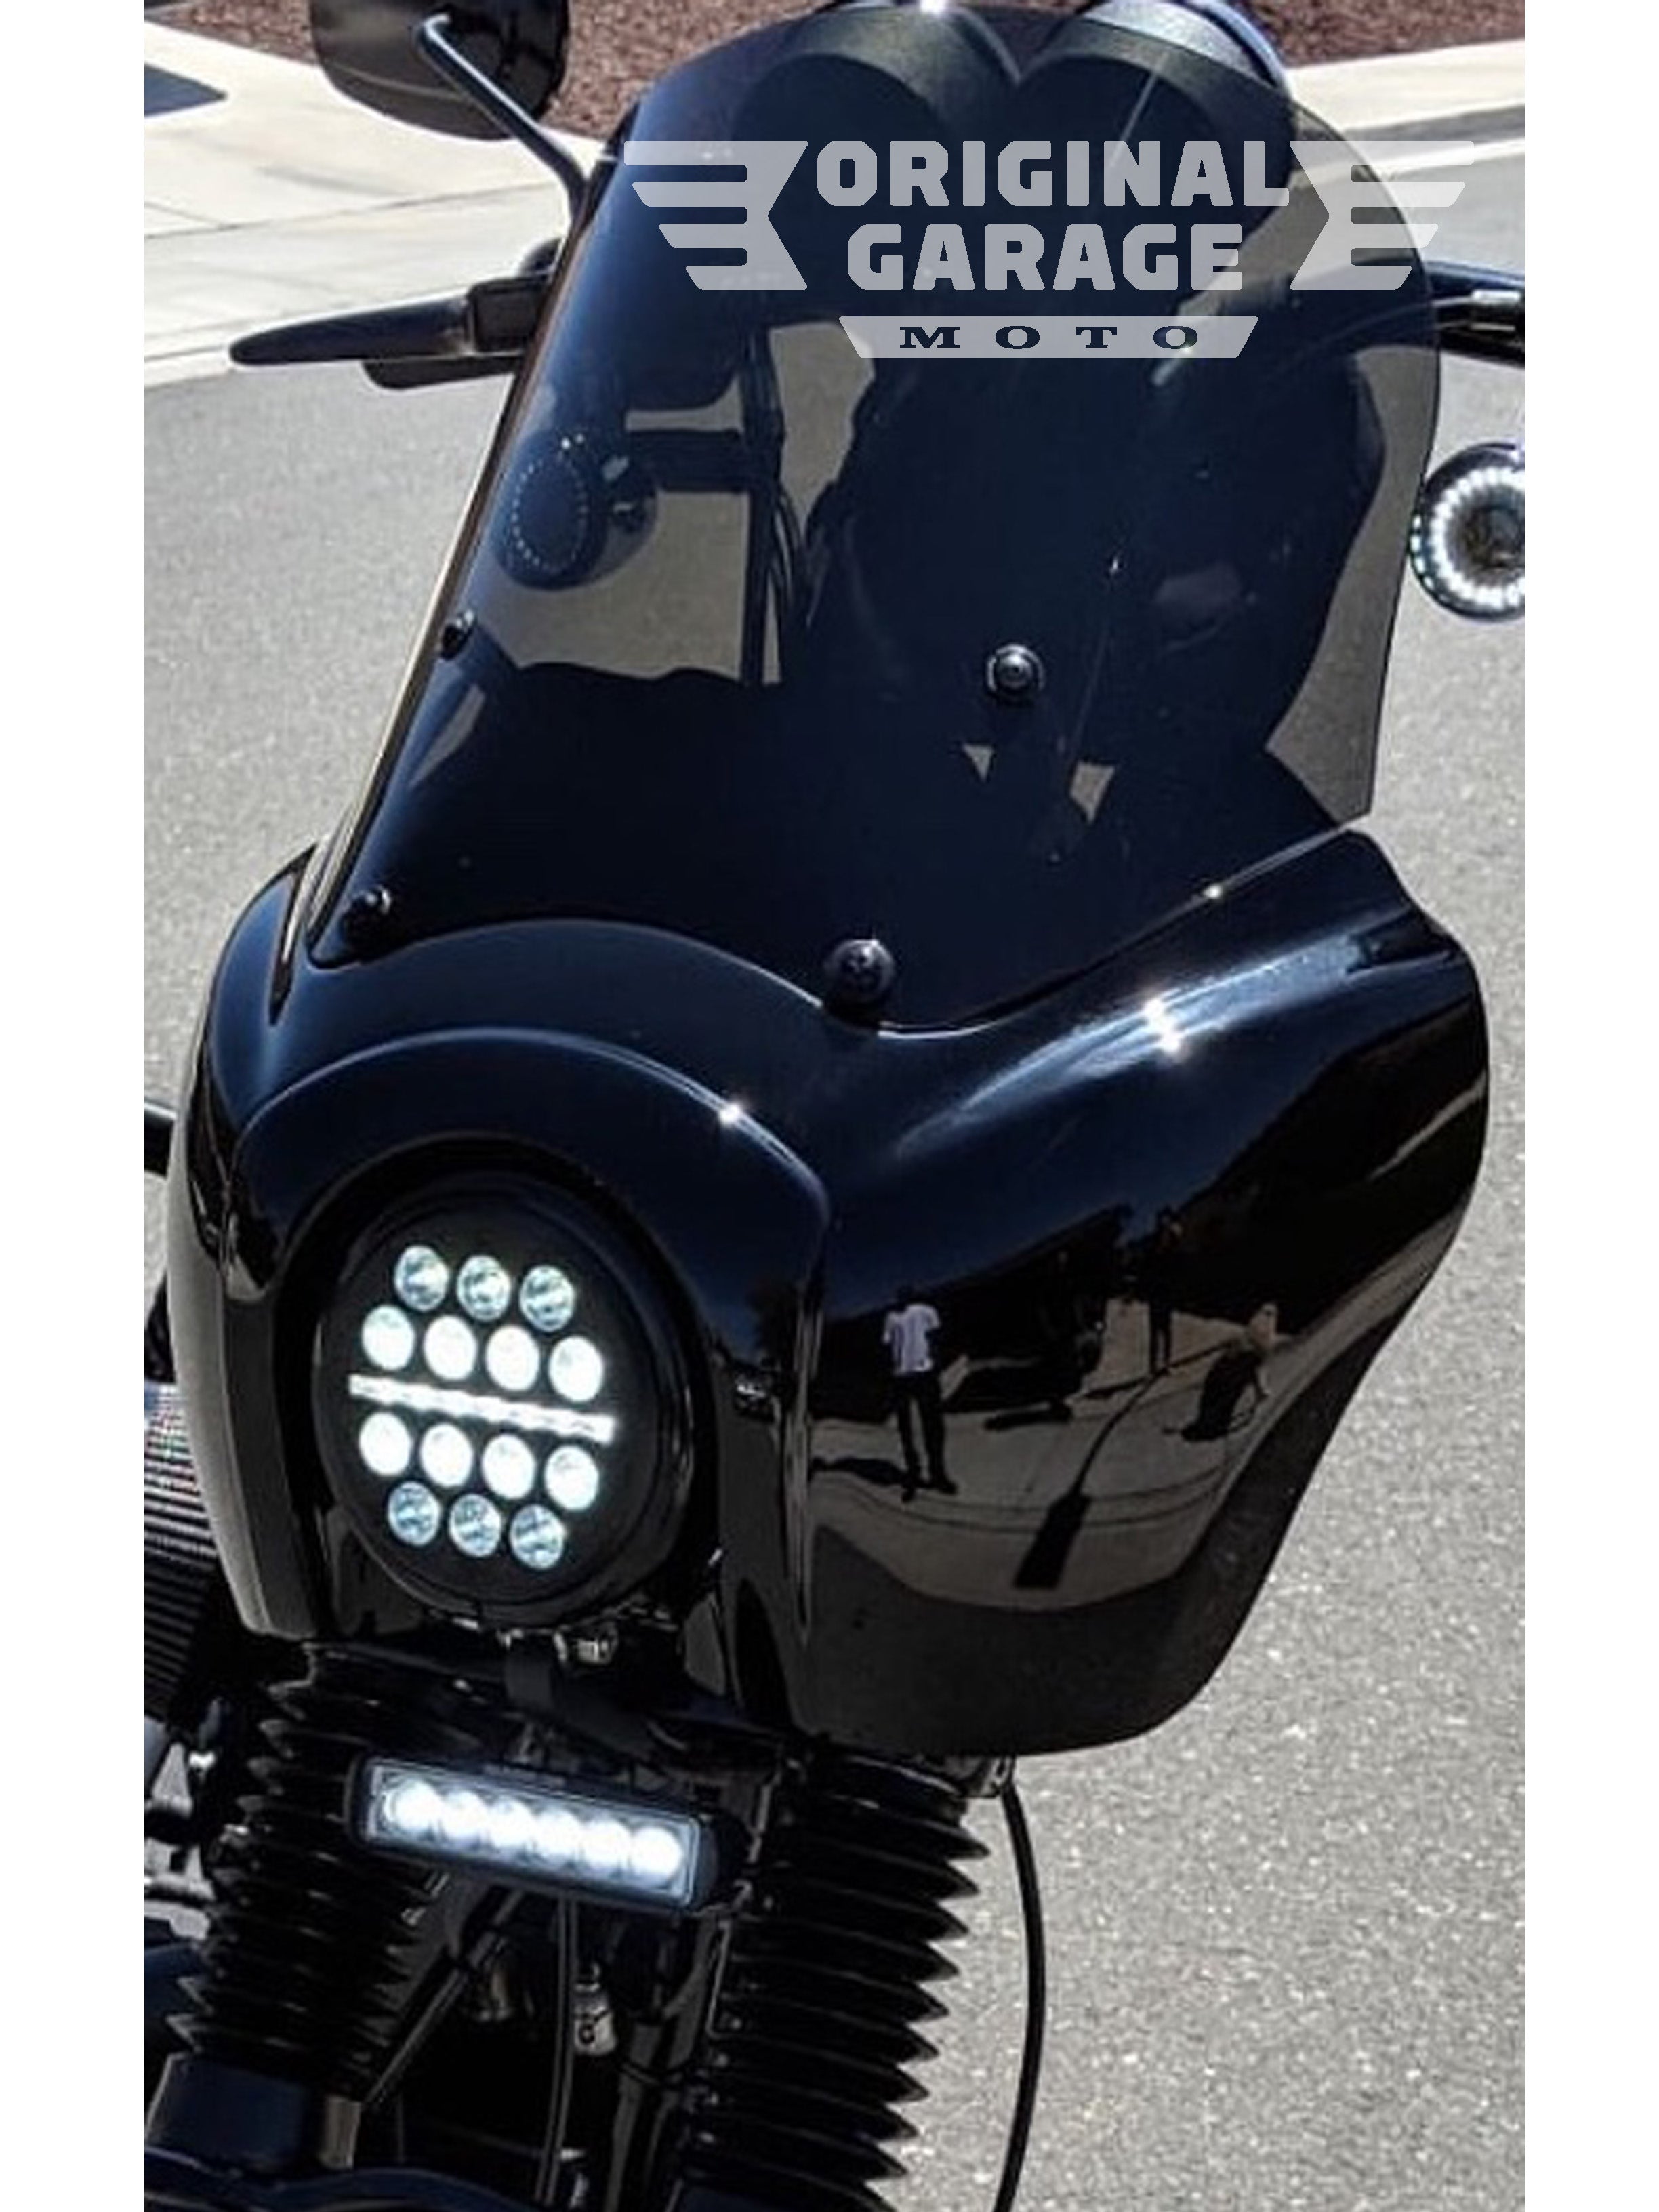 5.75" OG  X-series  LED Headlight for Harley-Davidson - Original Garage Moto